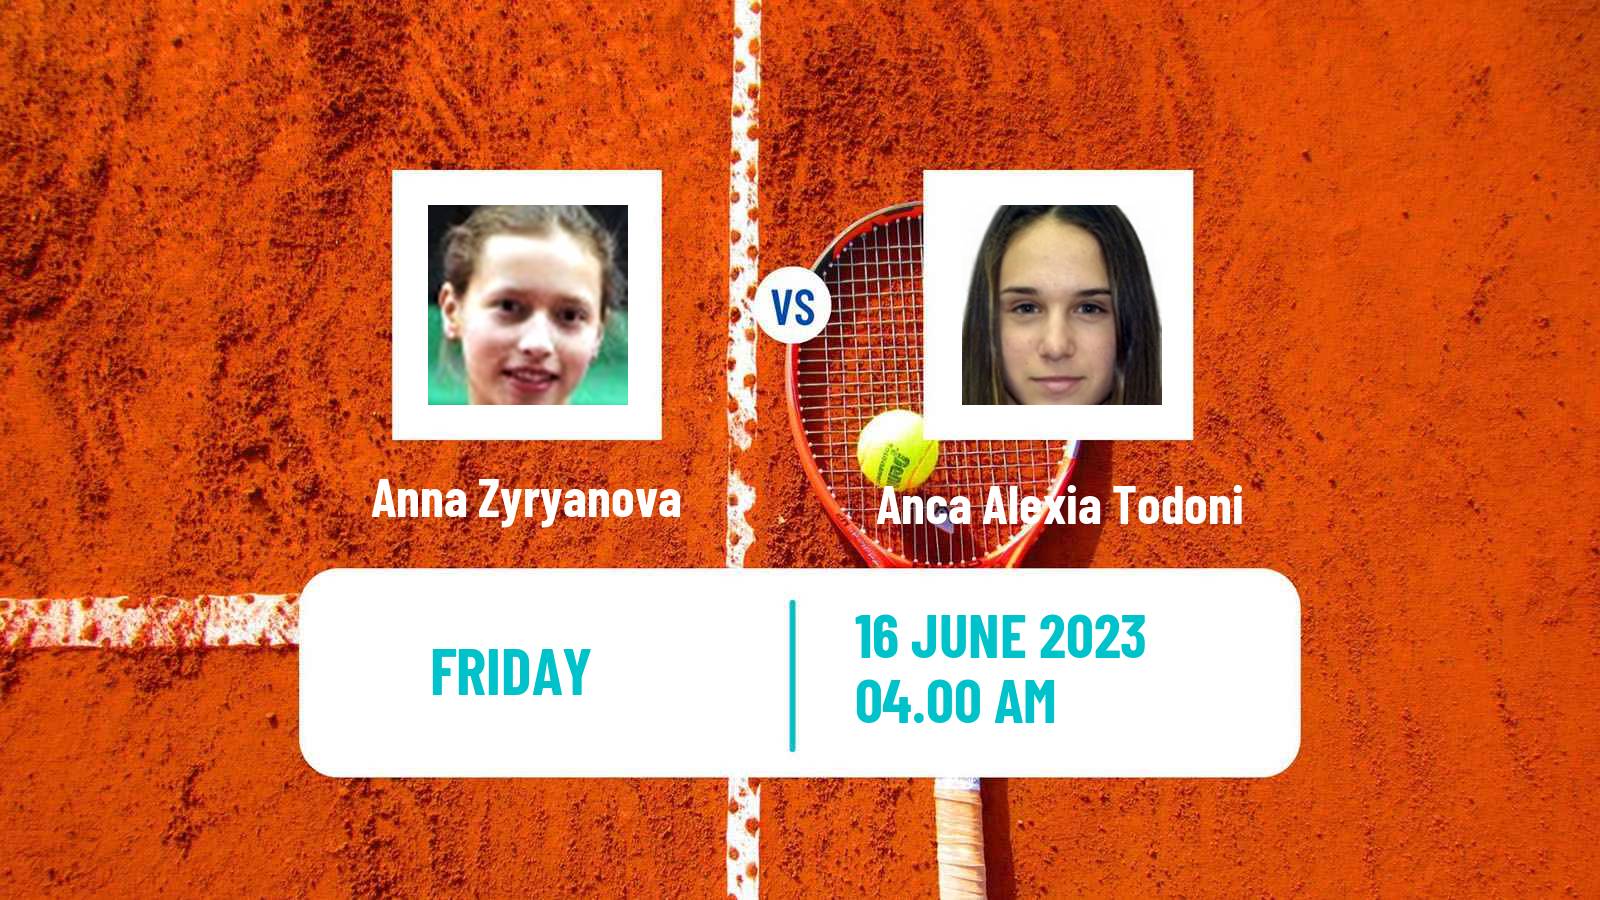 Tennis ITF W15 Kranjska Gora Women Anna Zyryanova - Anca Alexia Todoni